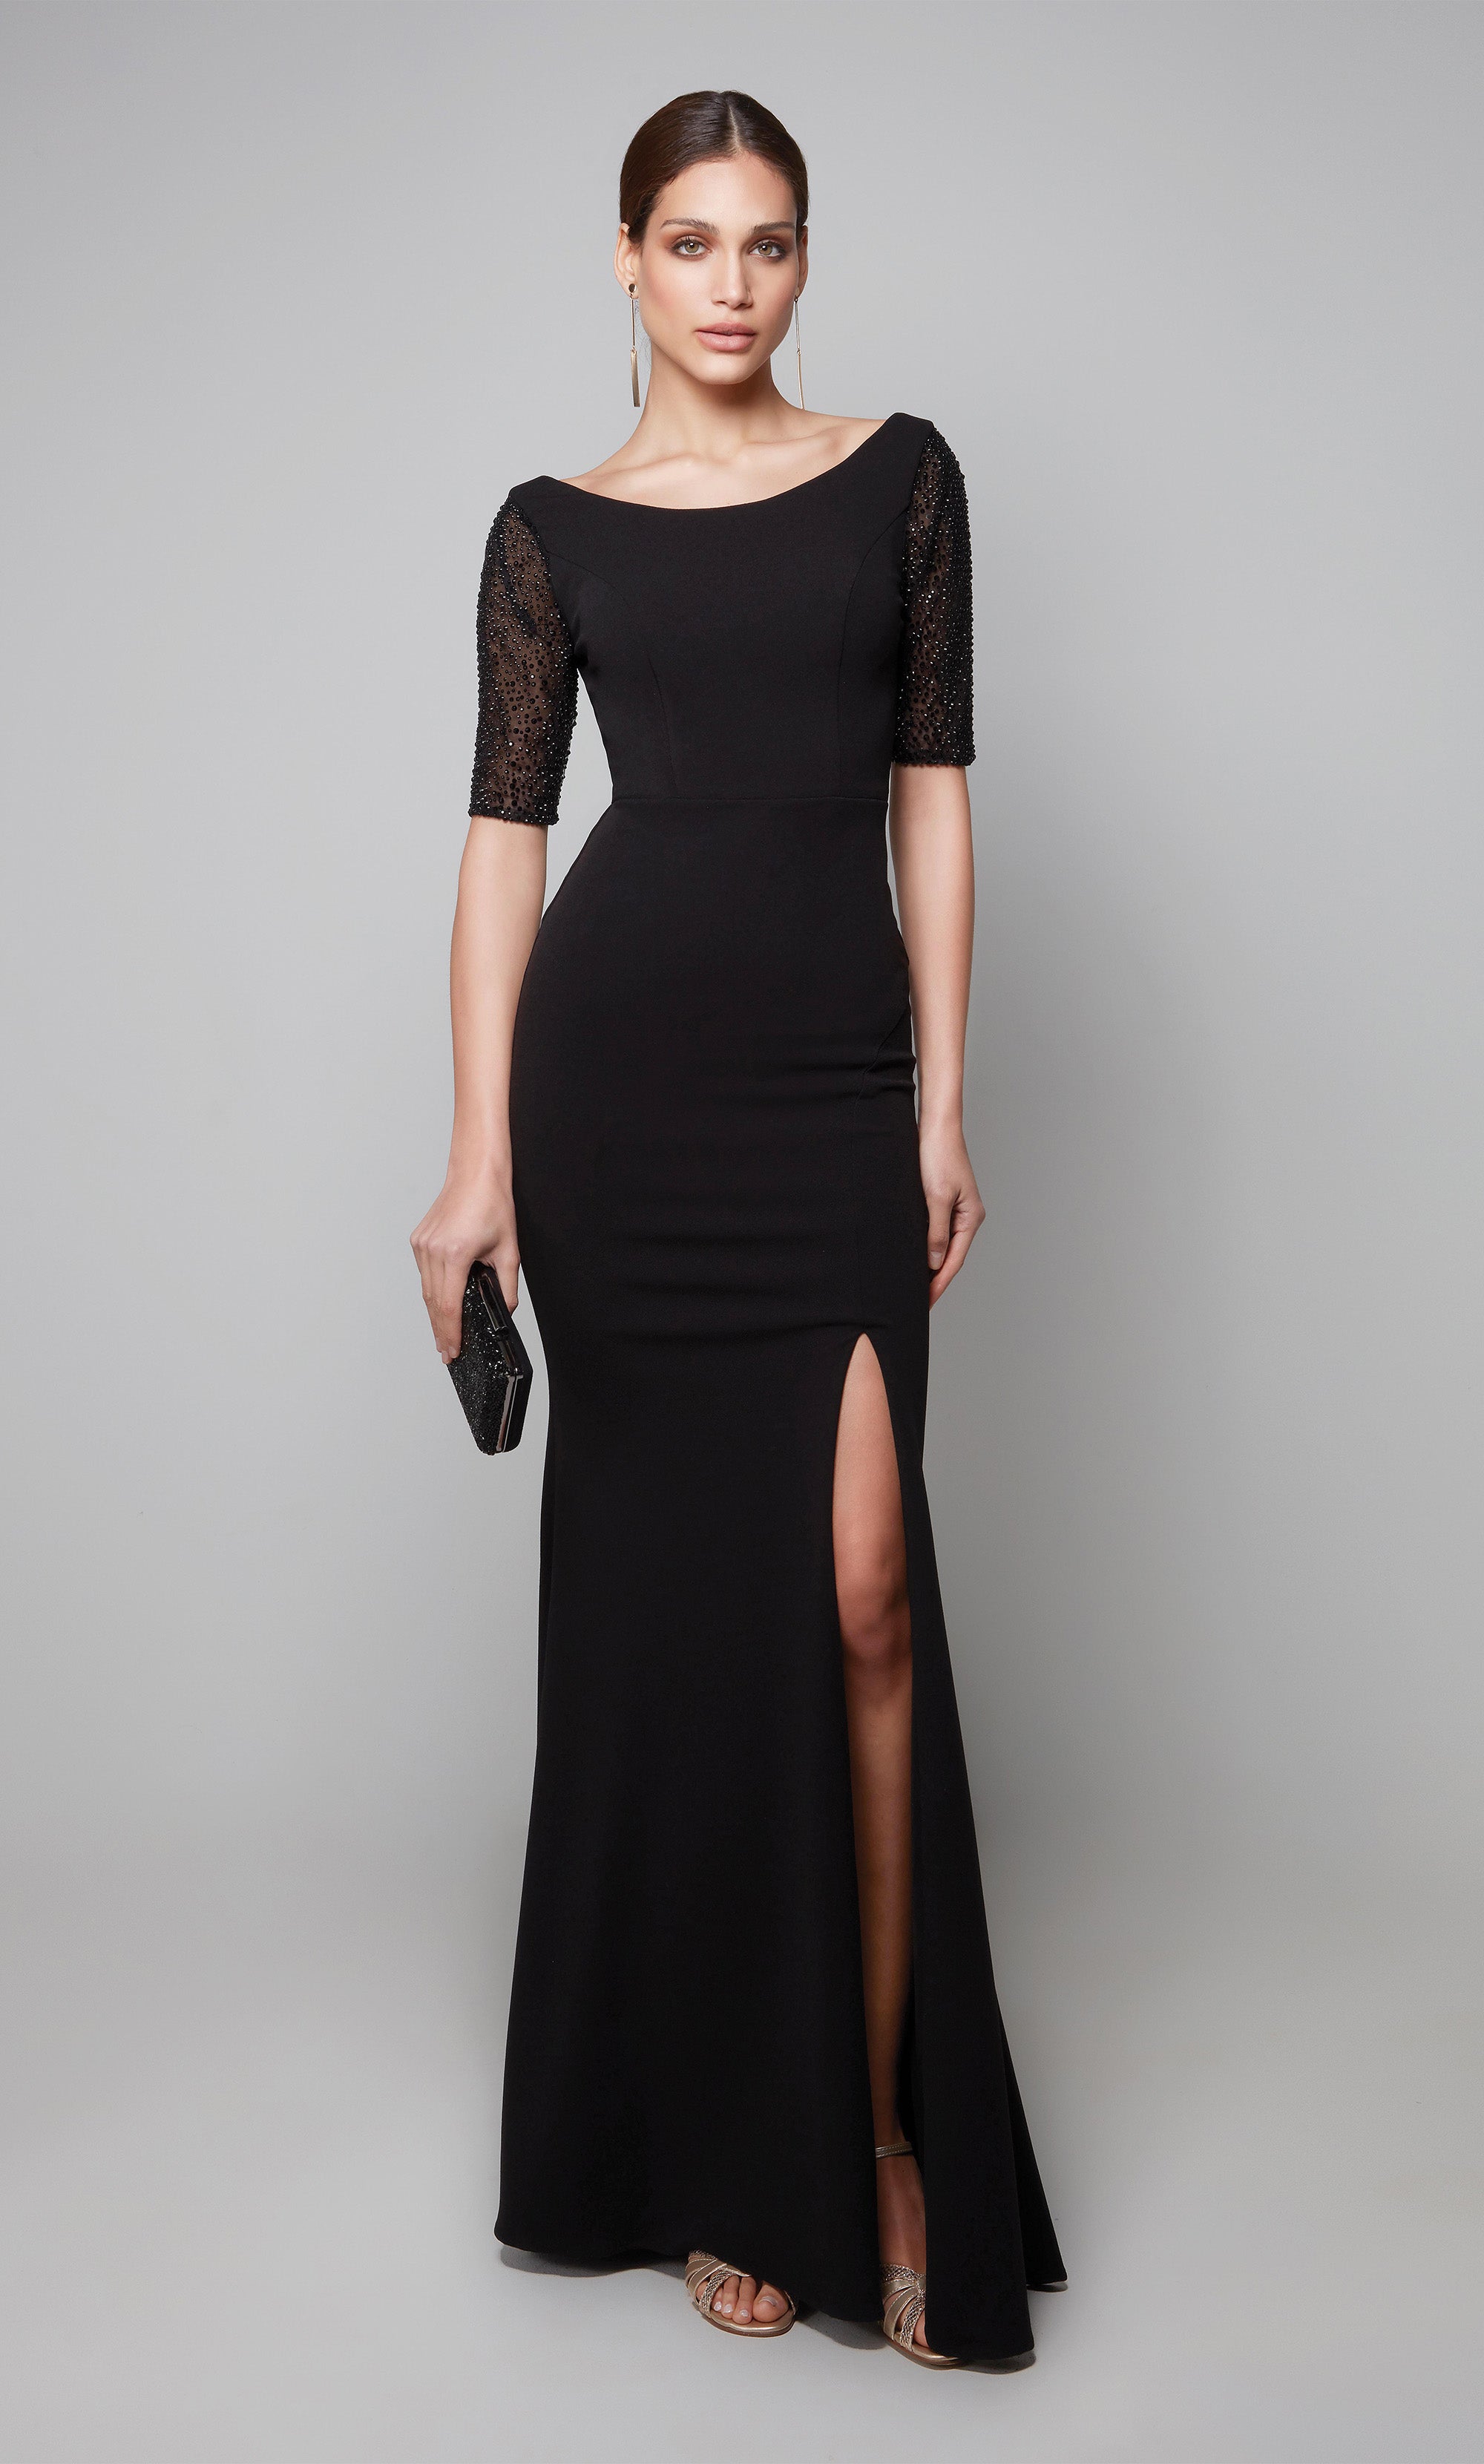 Beaded Black Lace Plus Size Long Prom Formal Dress - Promfy